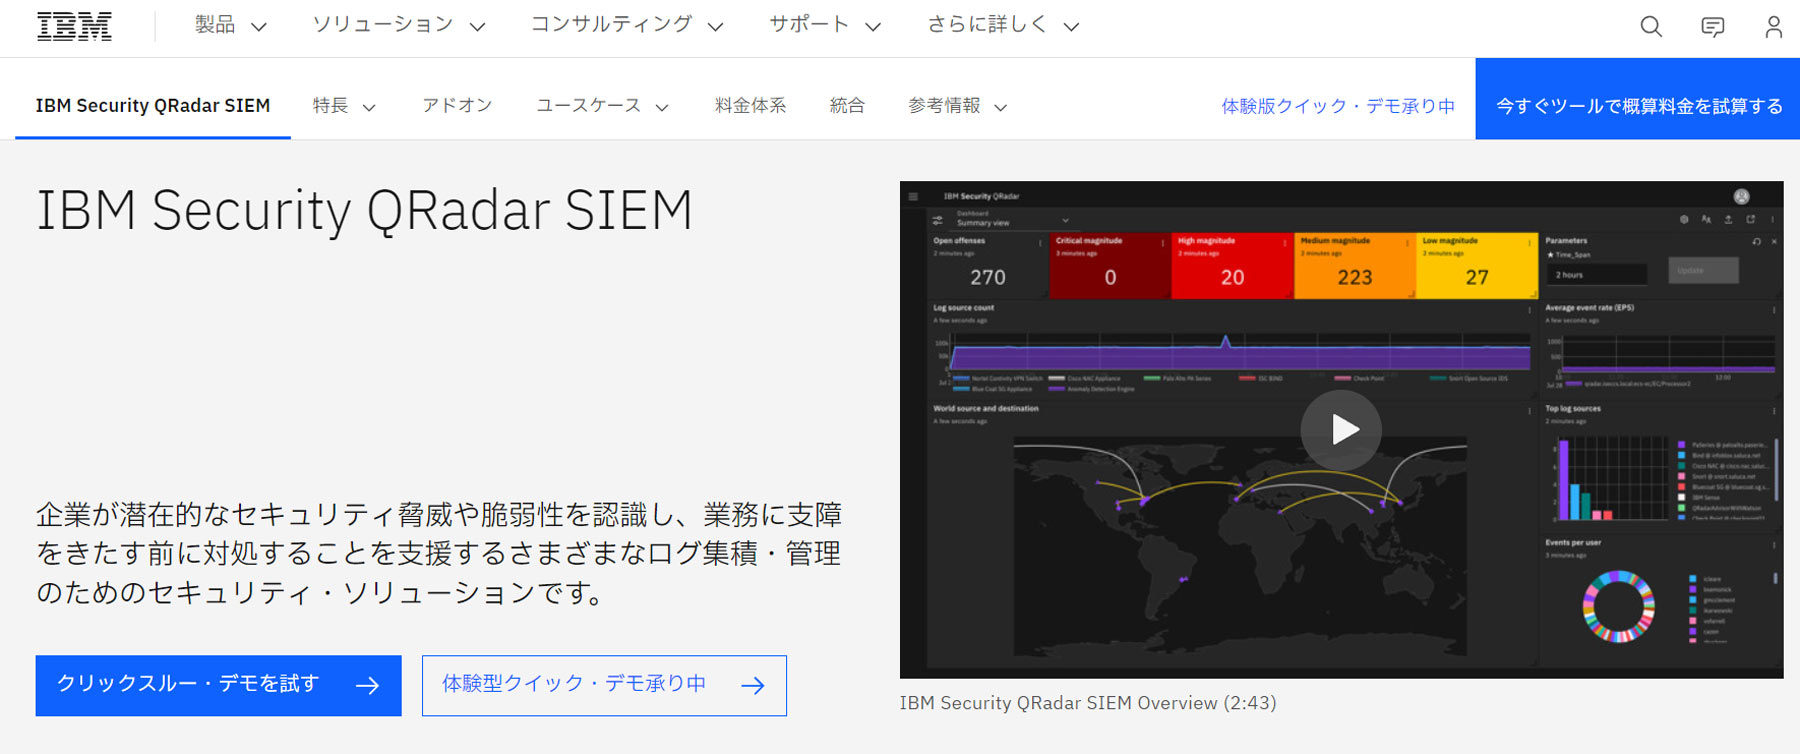 IBM Security QRadar SIEM公式Webサイト